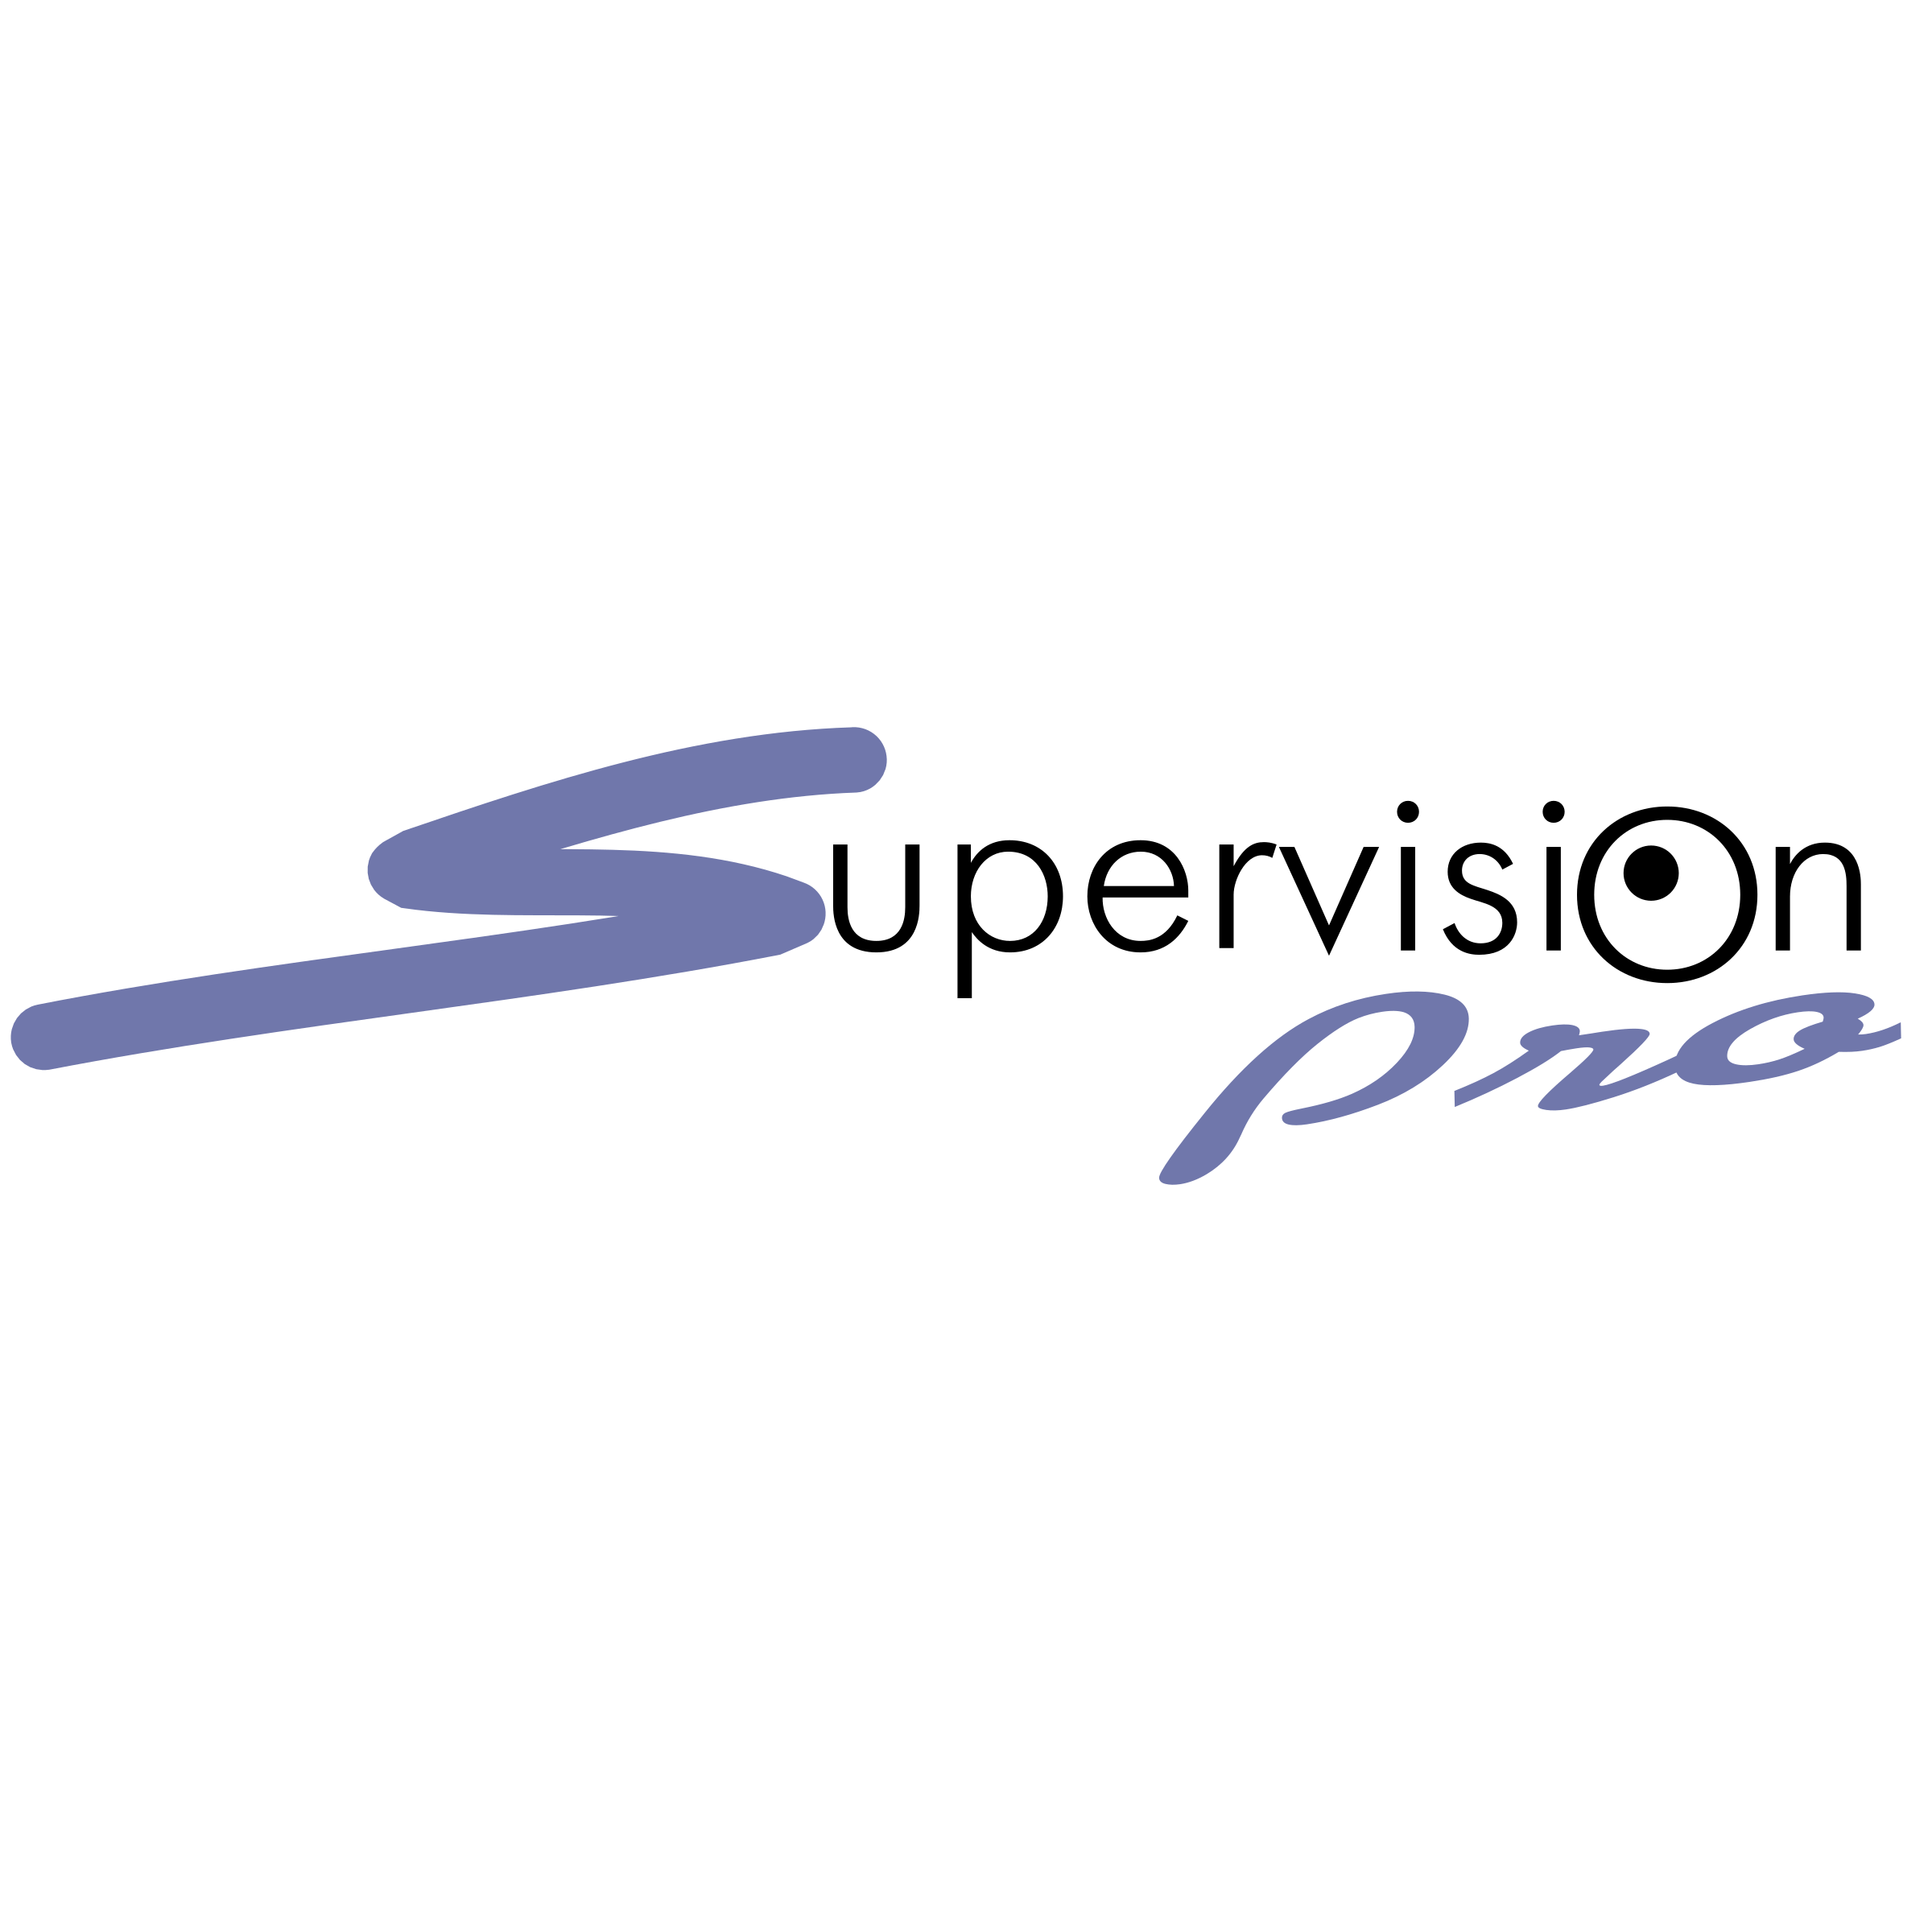 Supervision Logo - Supervision Pro Logo PNG Transparent & SVG Vector - Freebie Supply